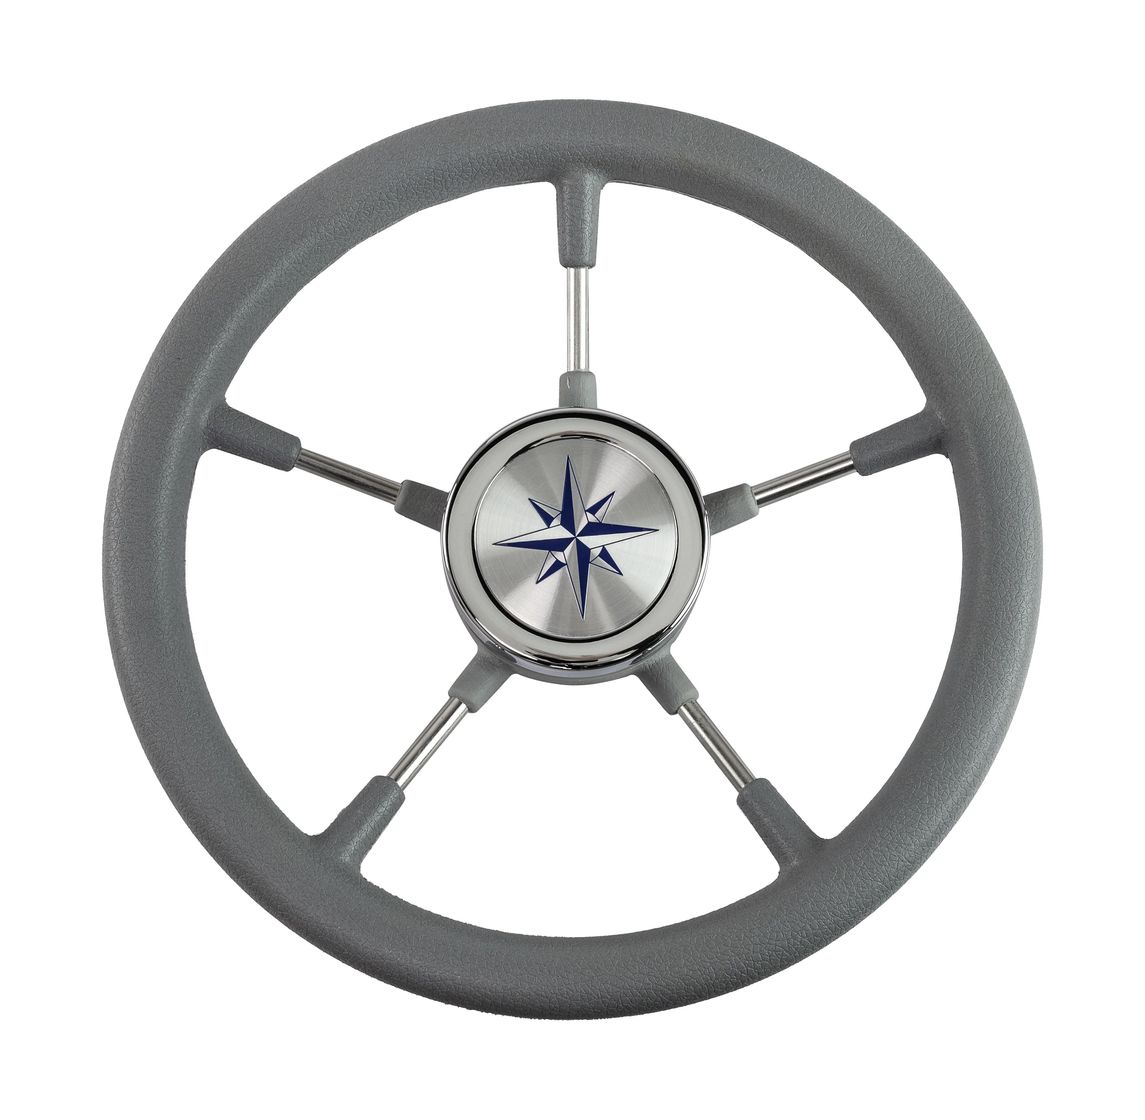 Рулевое колесо RIVA RSL обод серый, спицы серебряные д. 320 мм Volanti Luisi VN732022-03